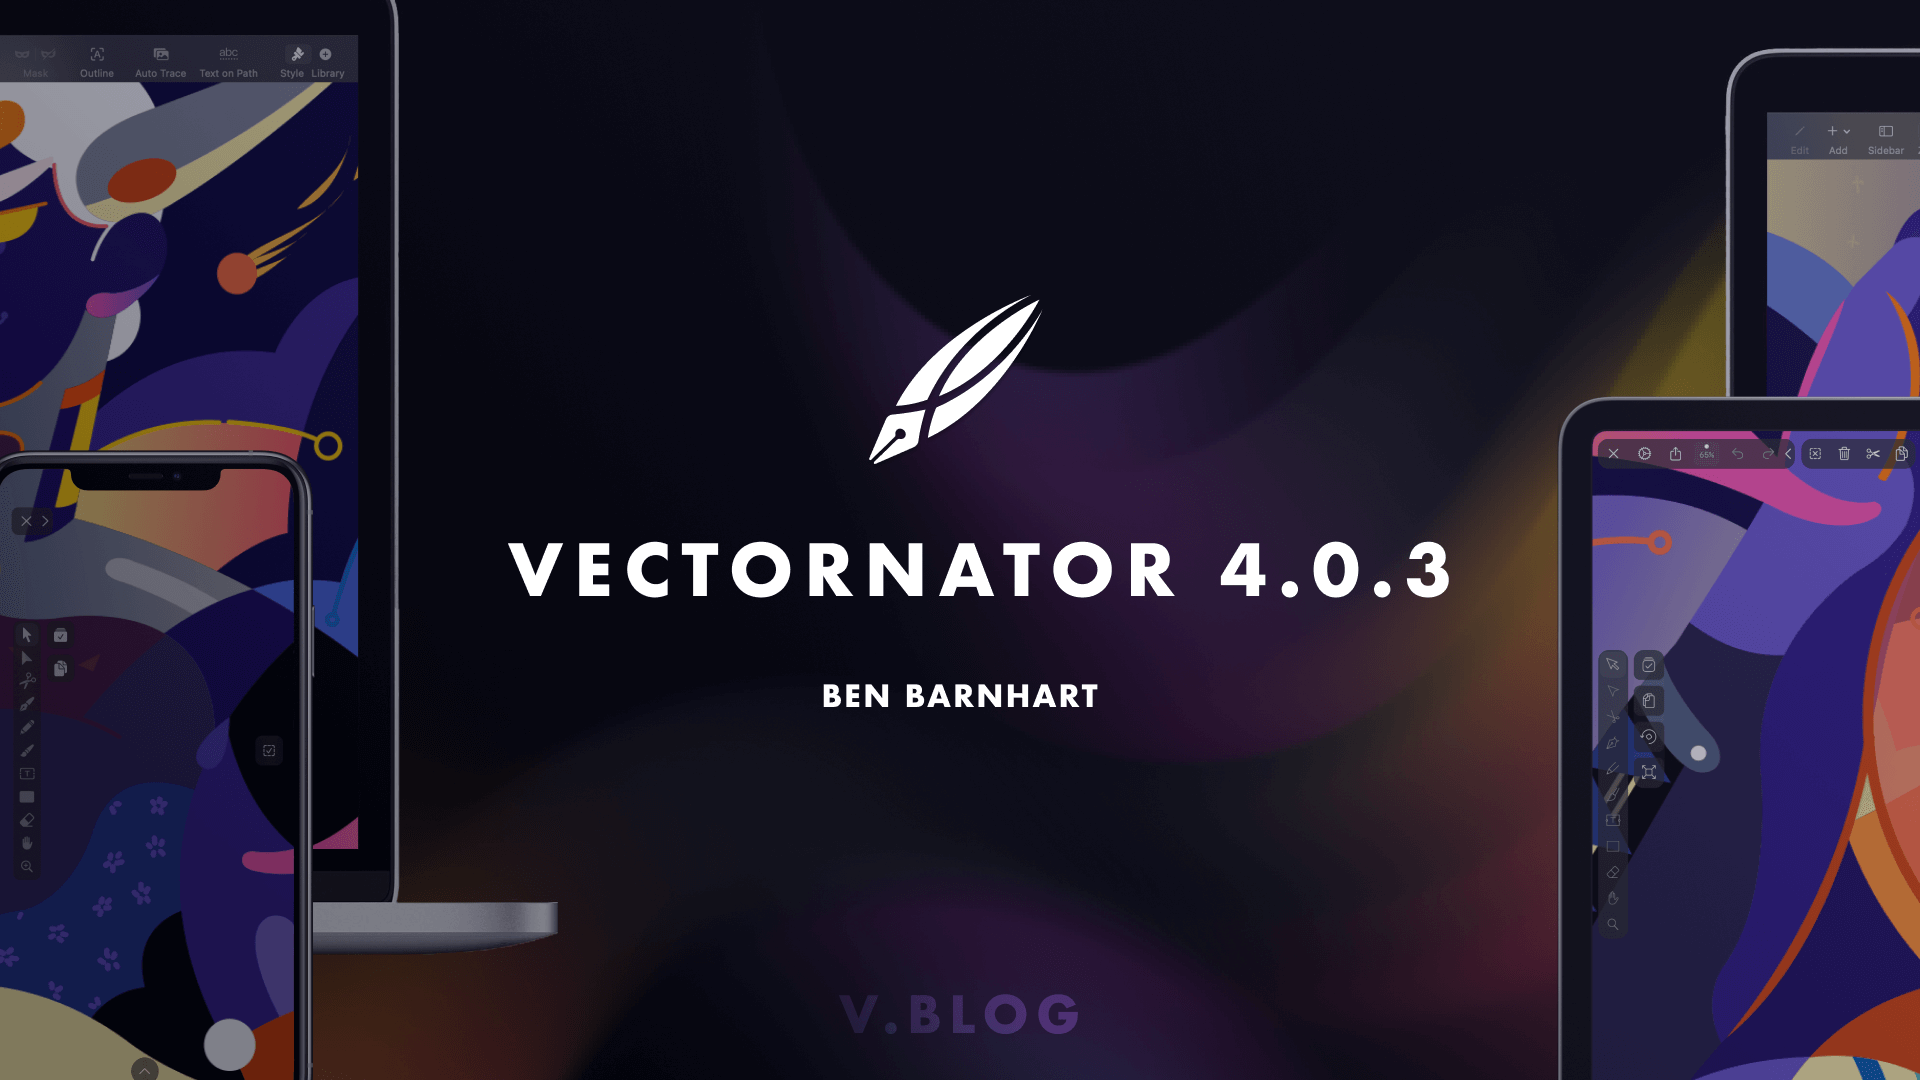 Vectornator 4.0.3